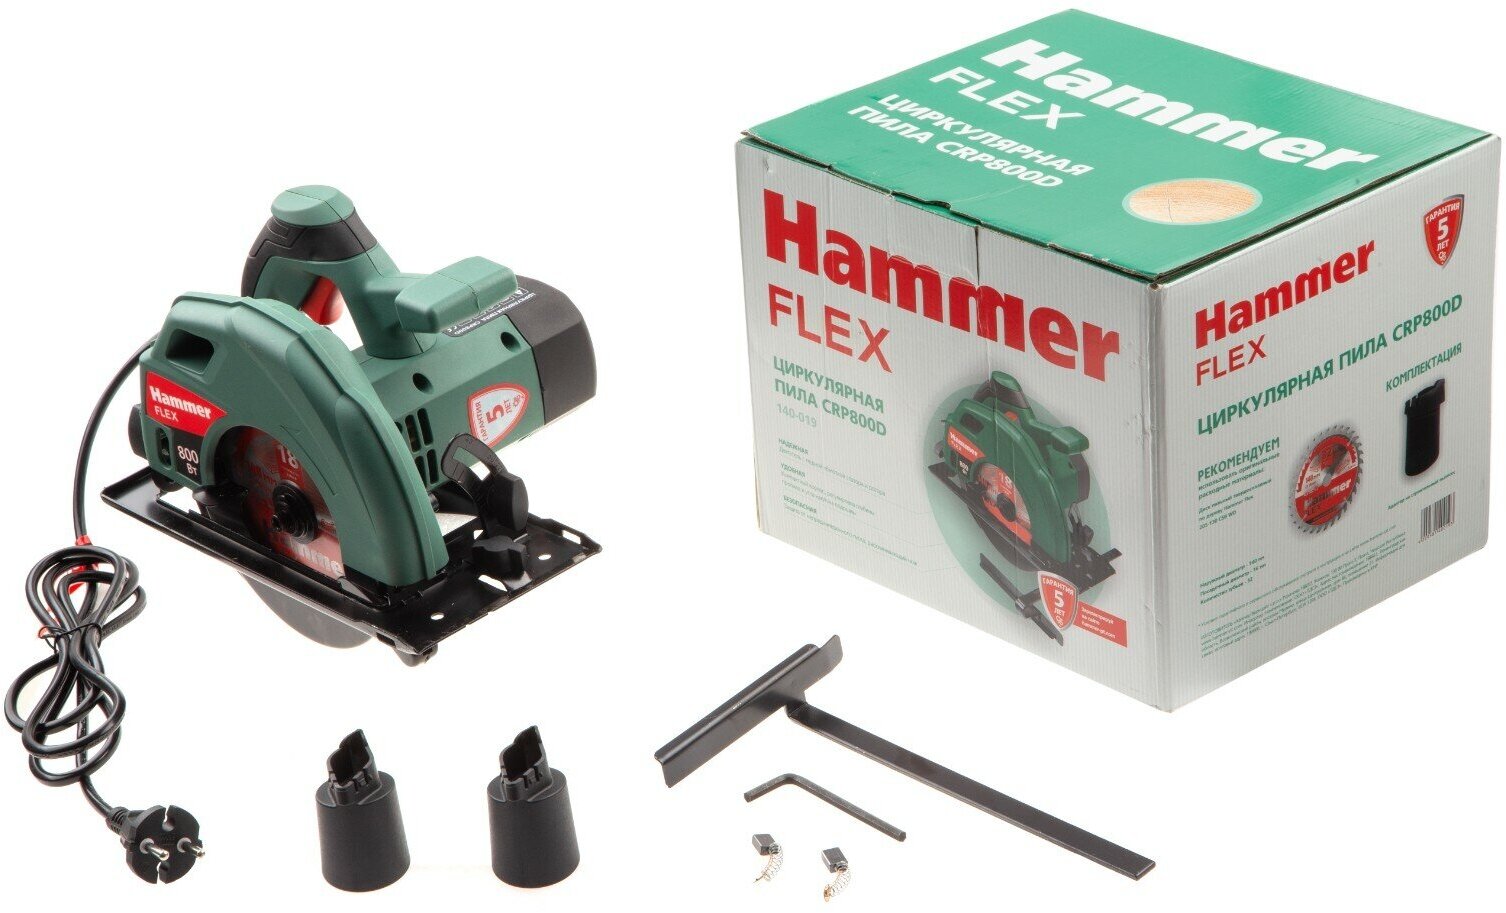 599628 Hammer Flex CRP800D Циркулярная пила